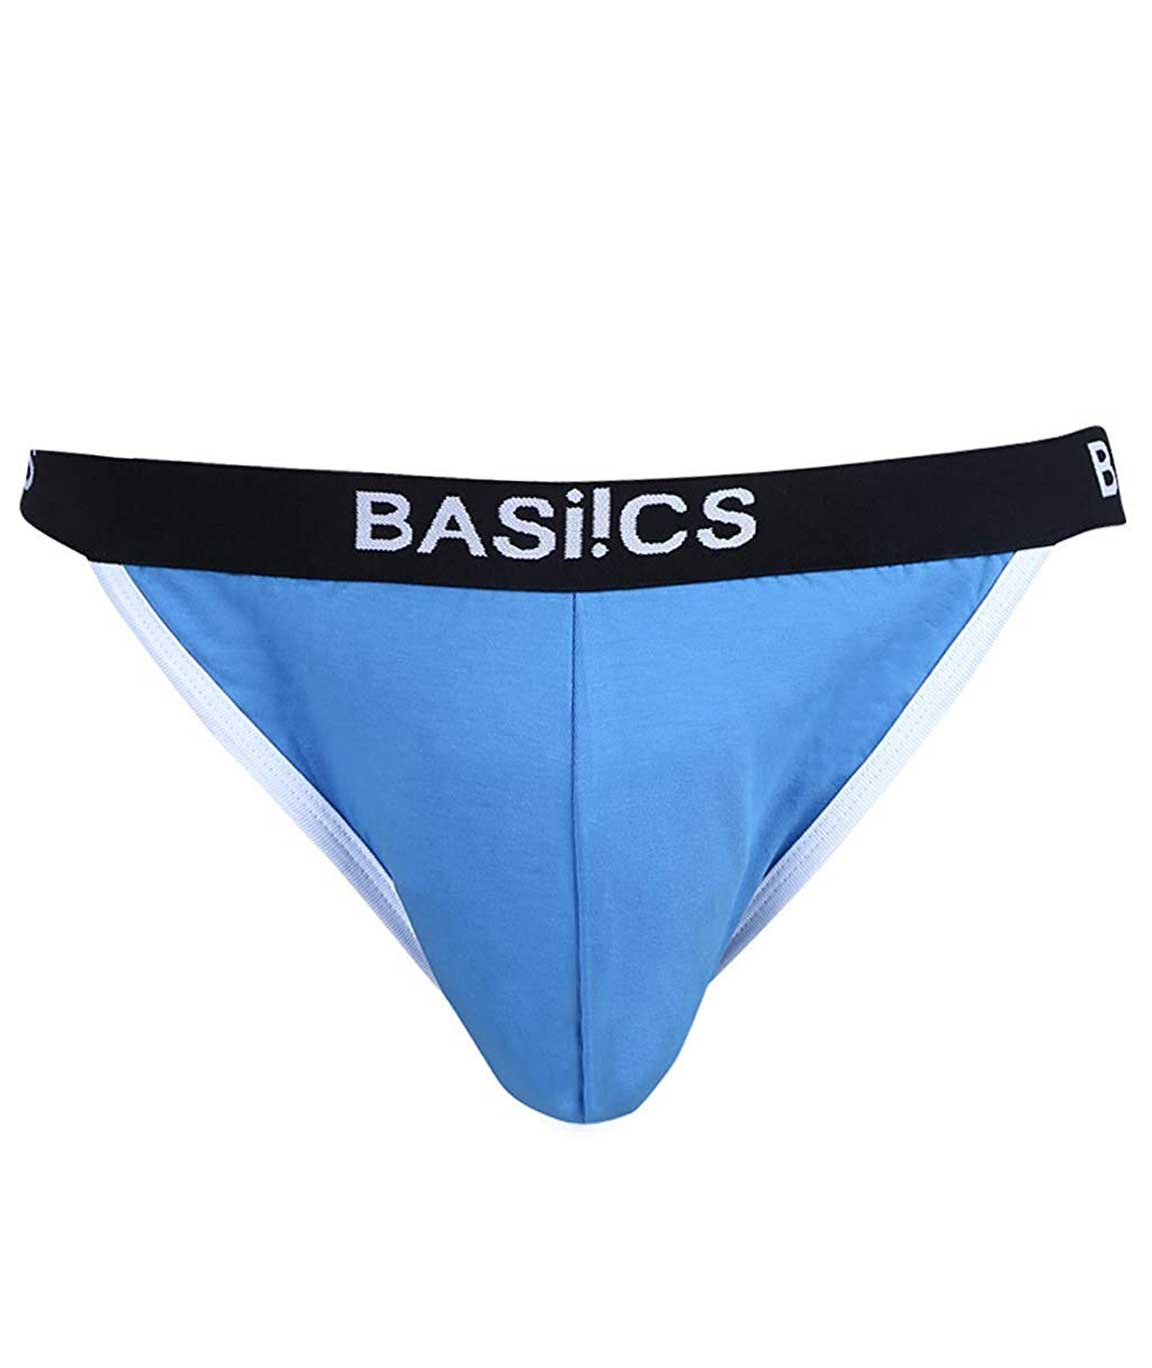 BASIICS by La Intimo Men`s Blue Cotton Spandex Thigh High Brief